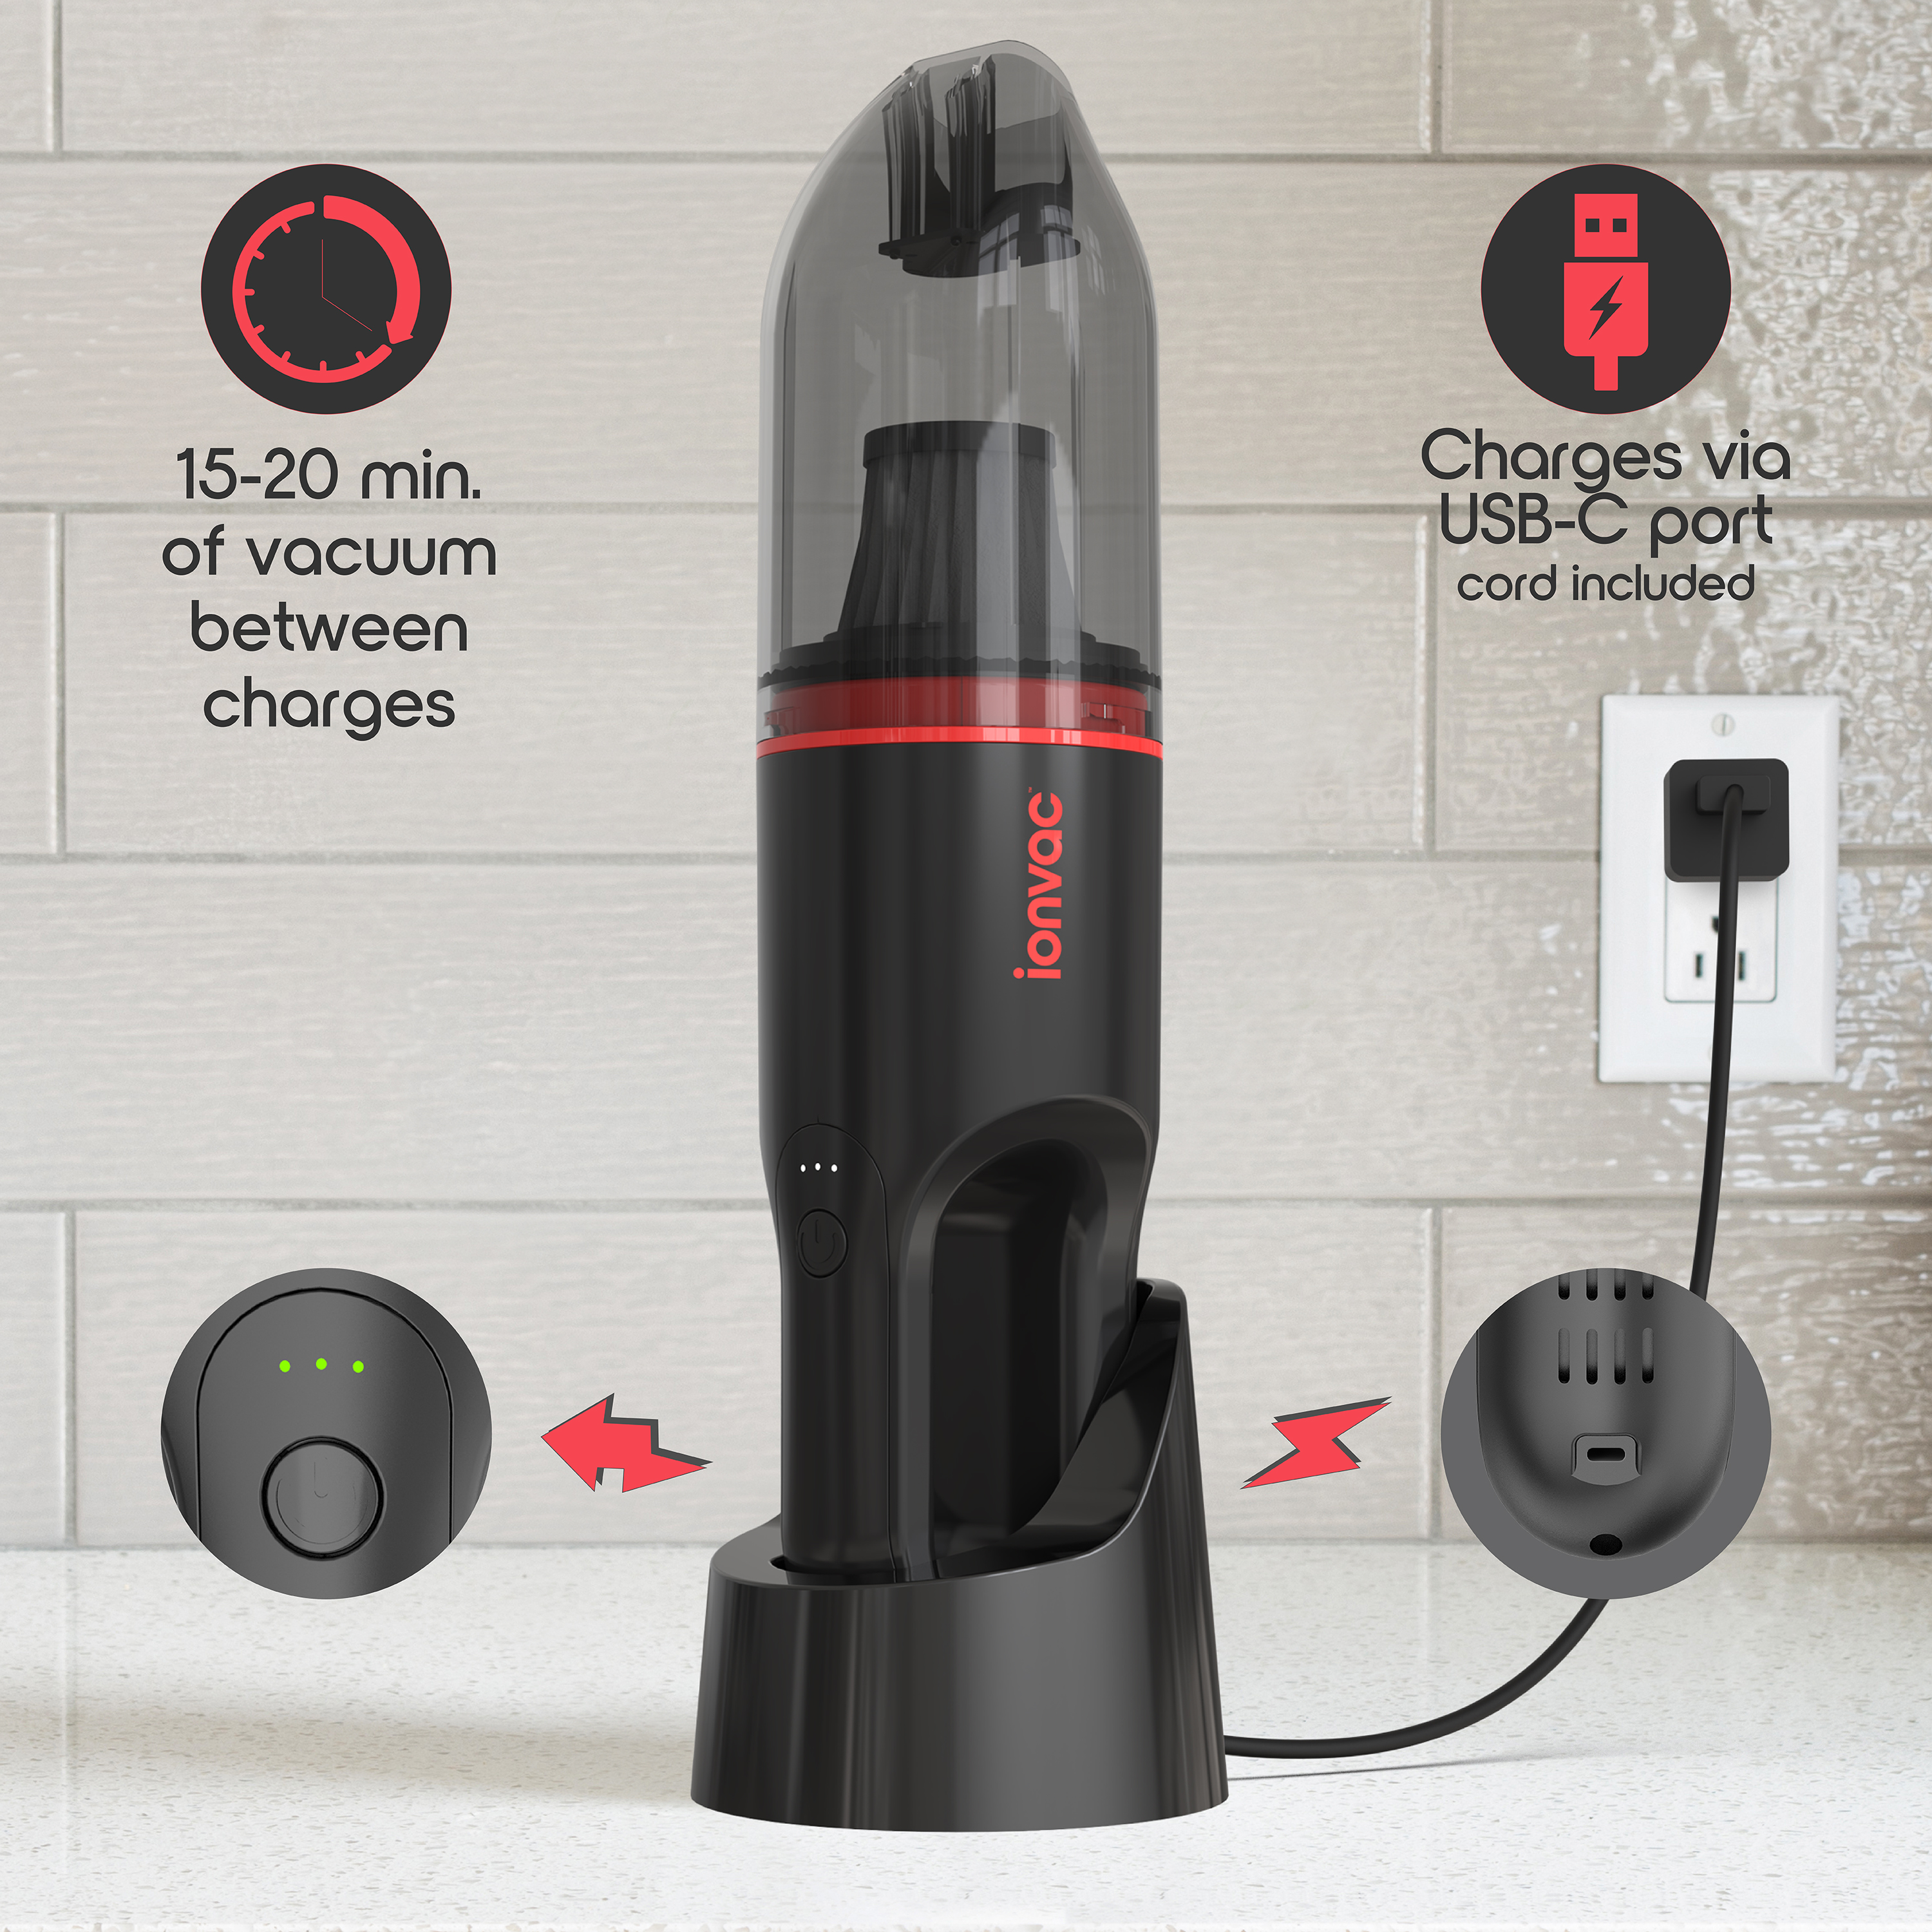 IonVac Cordless Vacuum, Lightweight Handheld Cordless Vacuum Cleaner, USB Charging, Multi-Surface, New - image 5 of 13